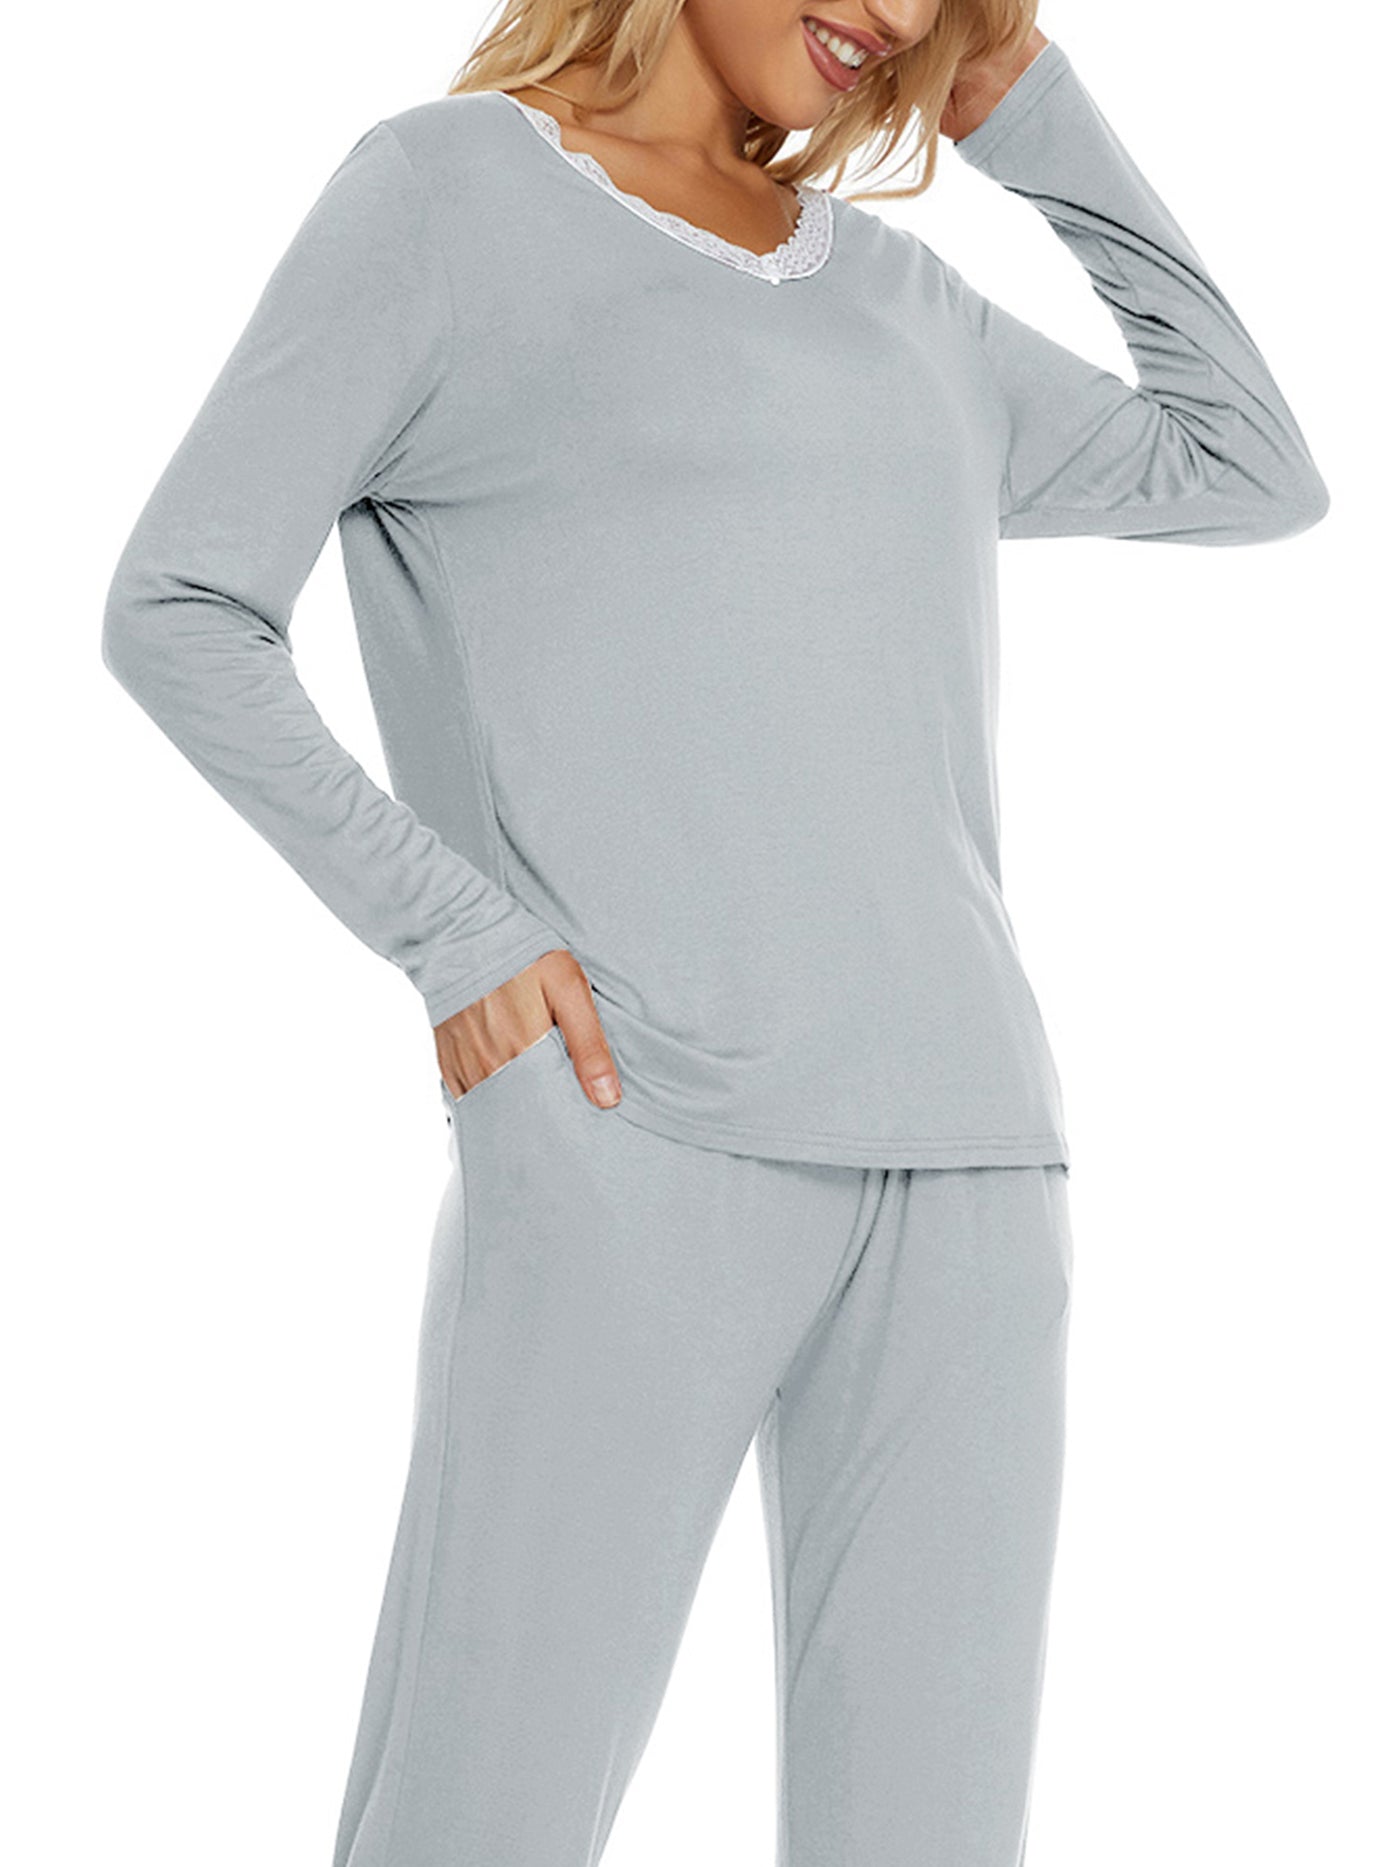 Bublédon Sleepwear V Neck Lace Nightwear Pants Loungewear Pajama Set